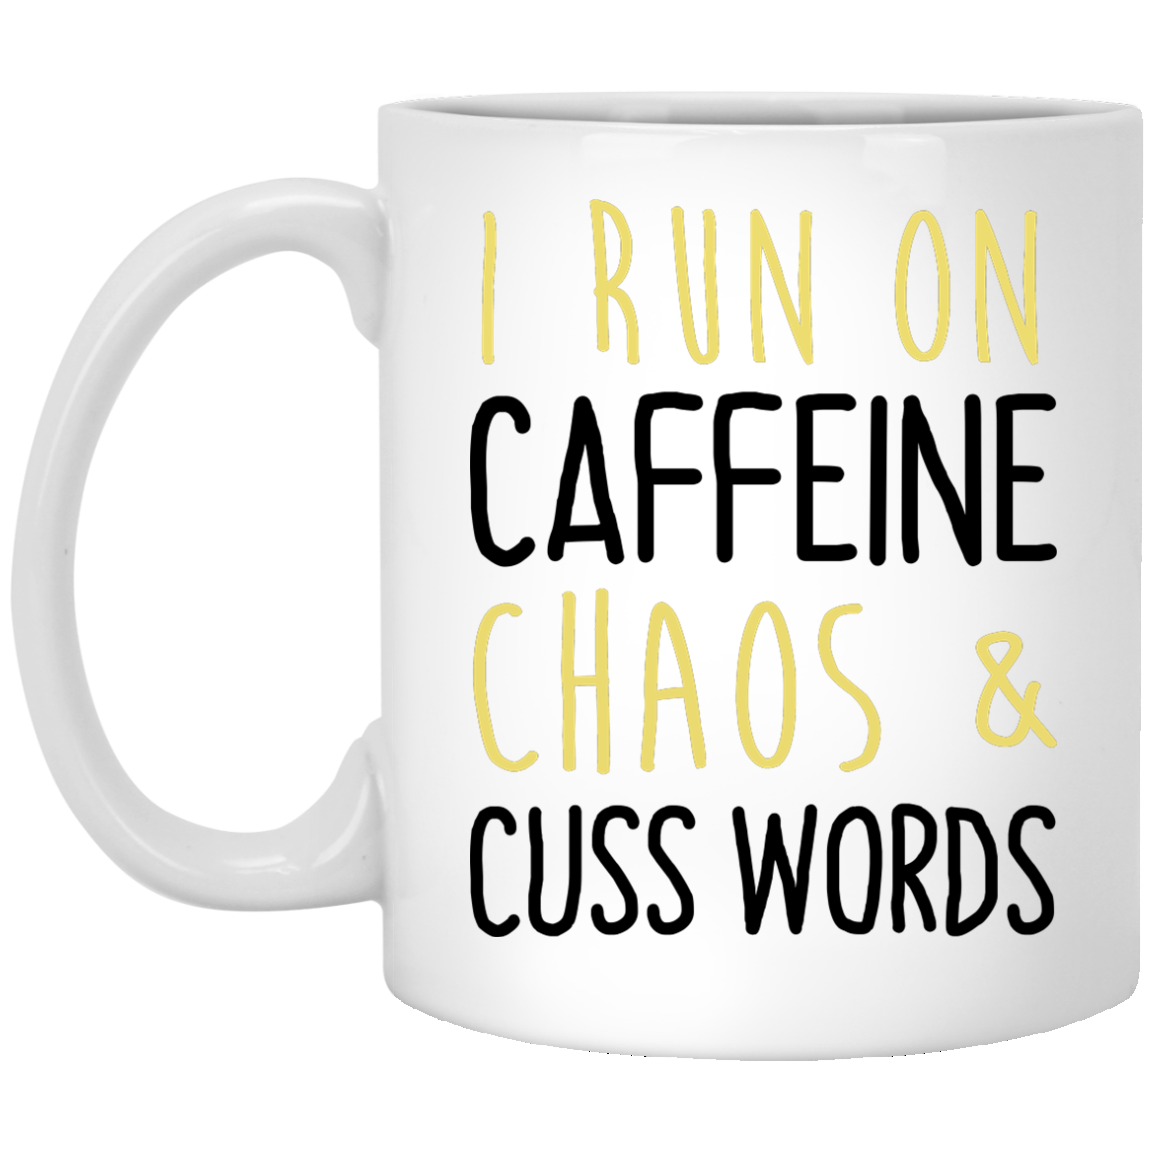 I run on caffeine chaos and cuss words mug